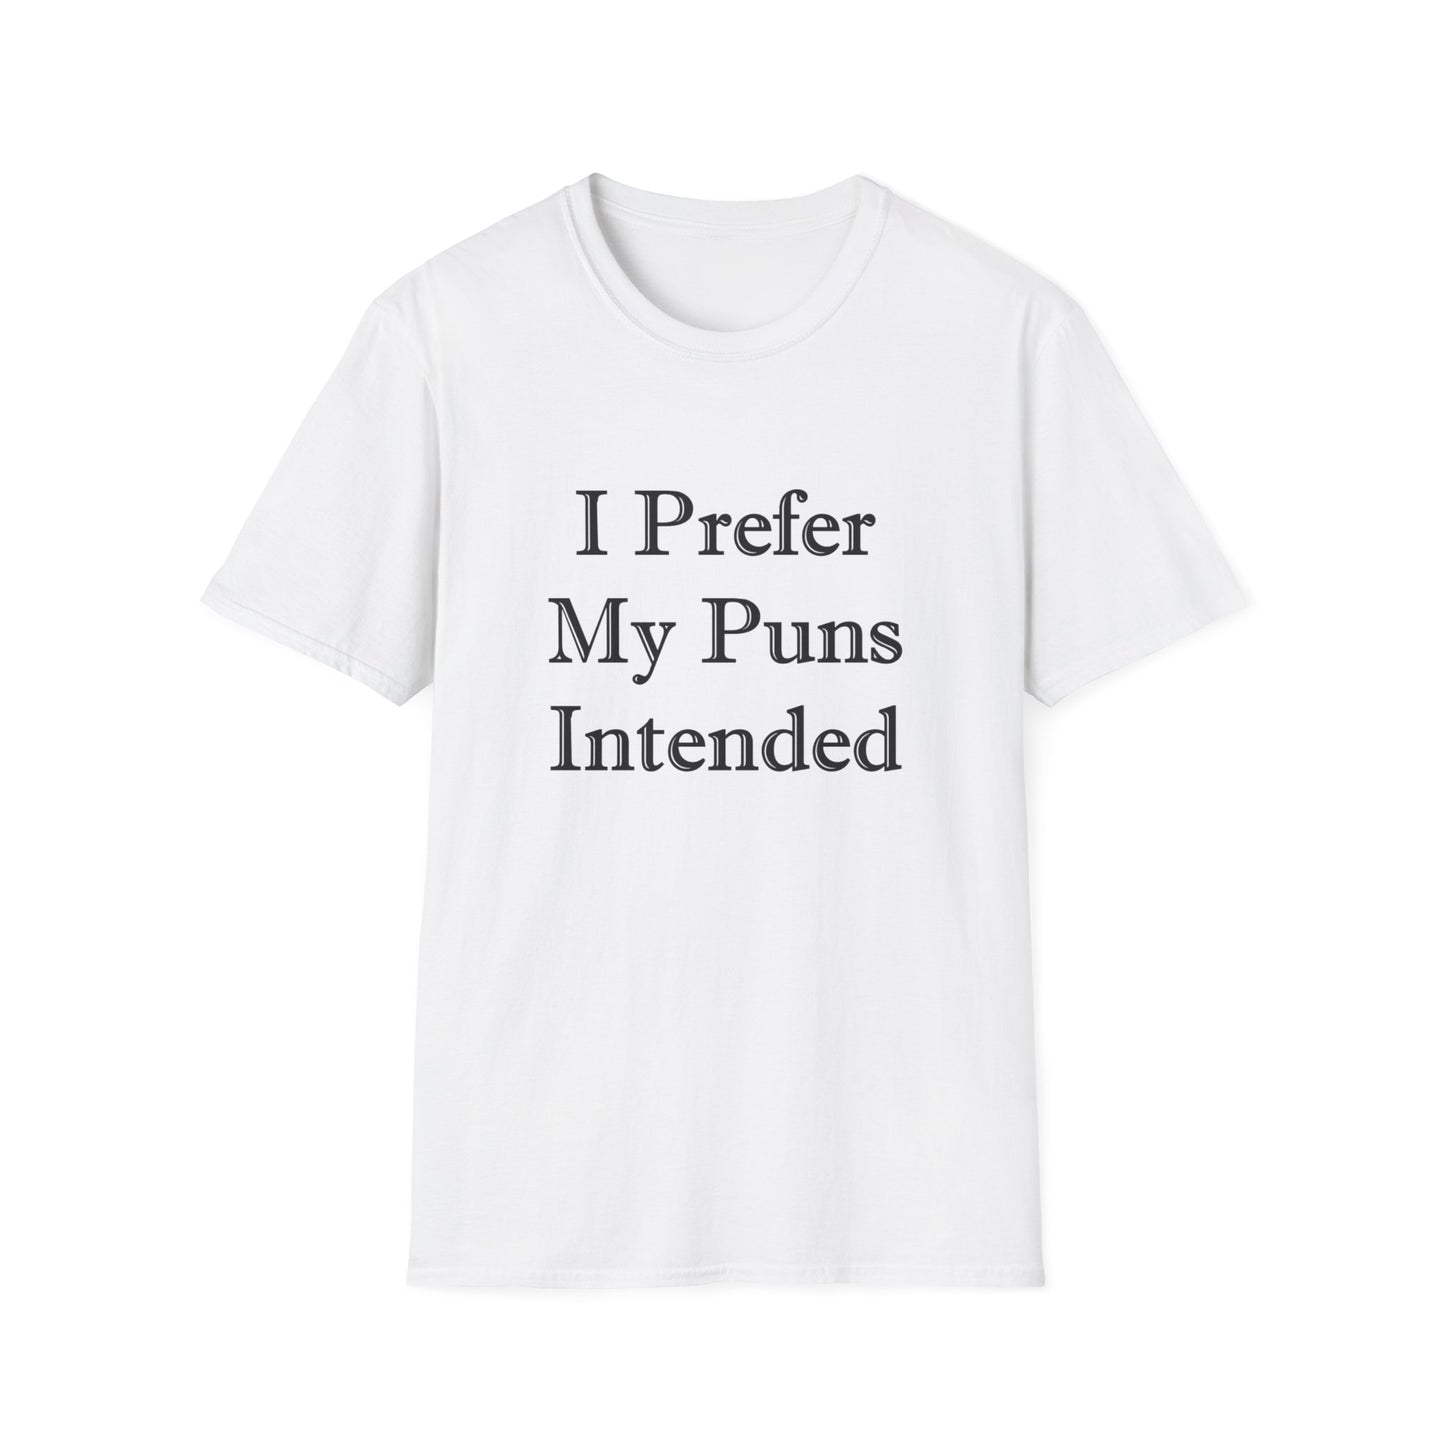 I Prefer My Puns Intended T-Shirt